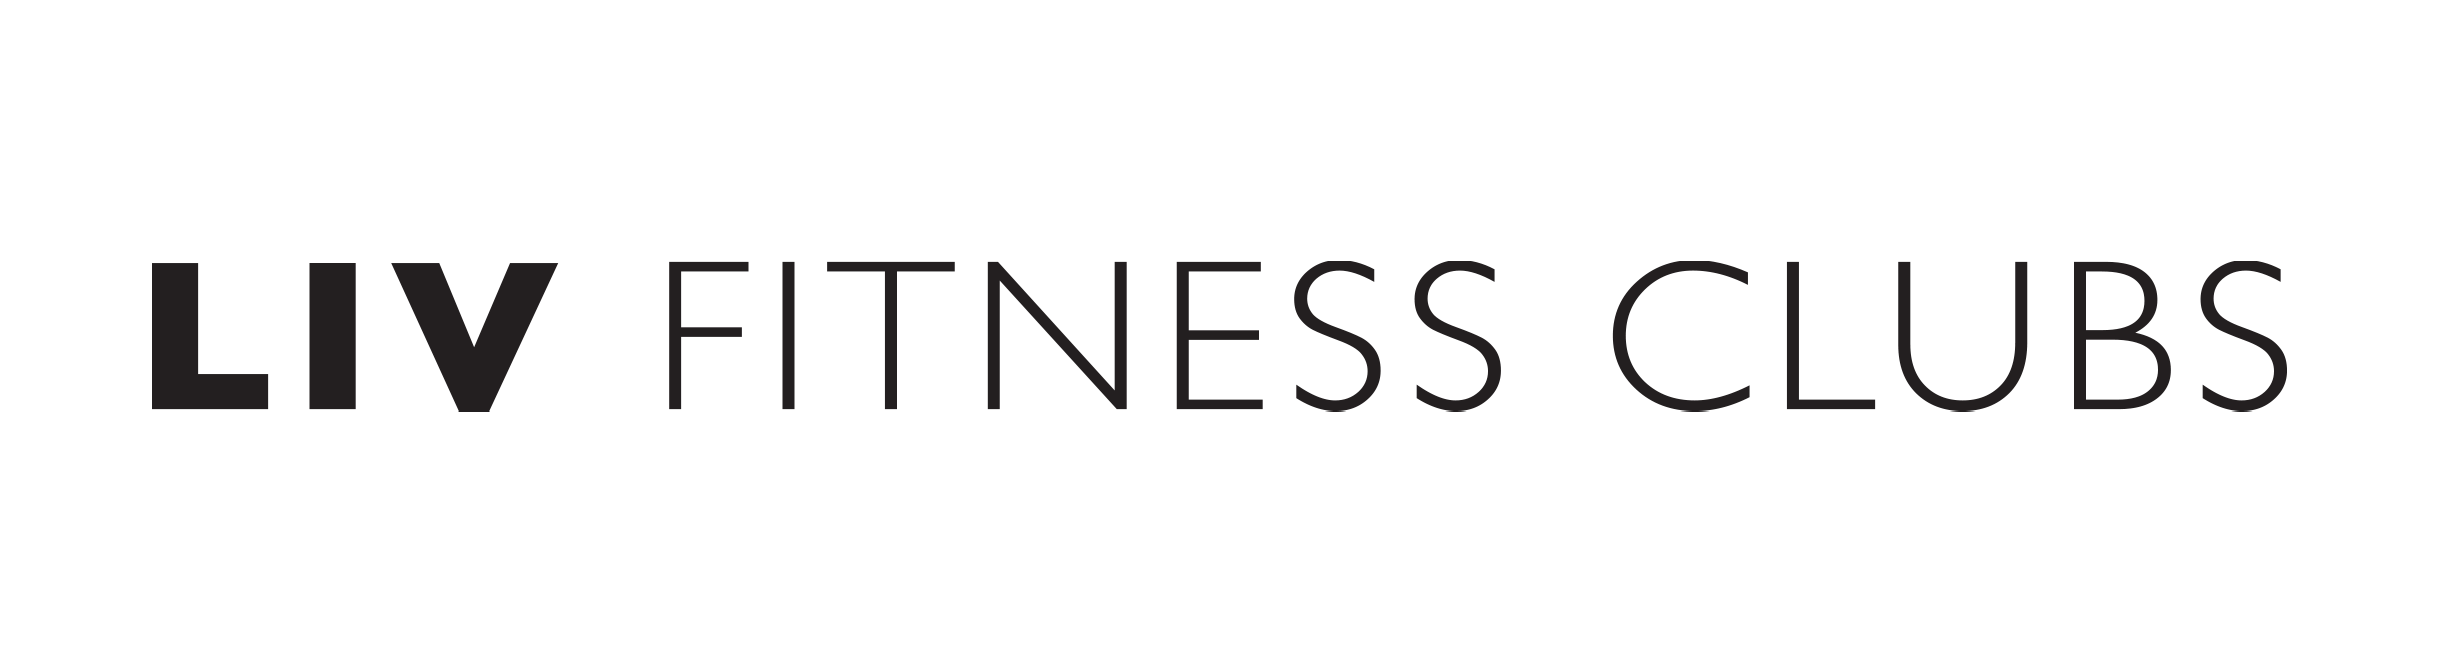 LIV fitness clubs logo